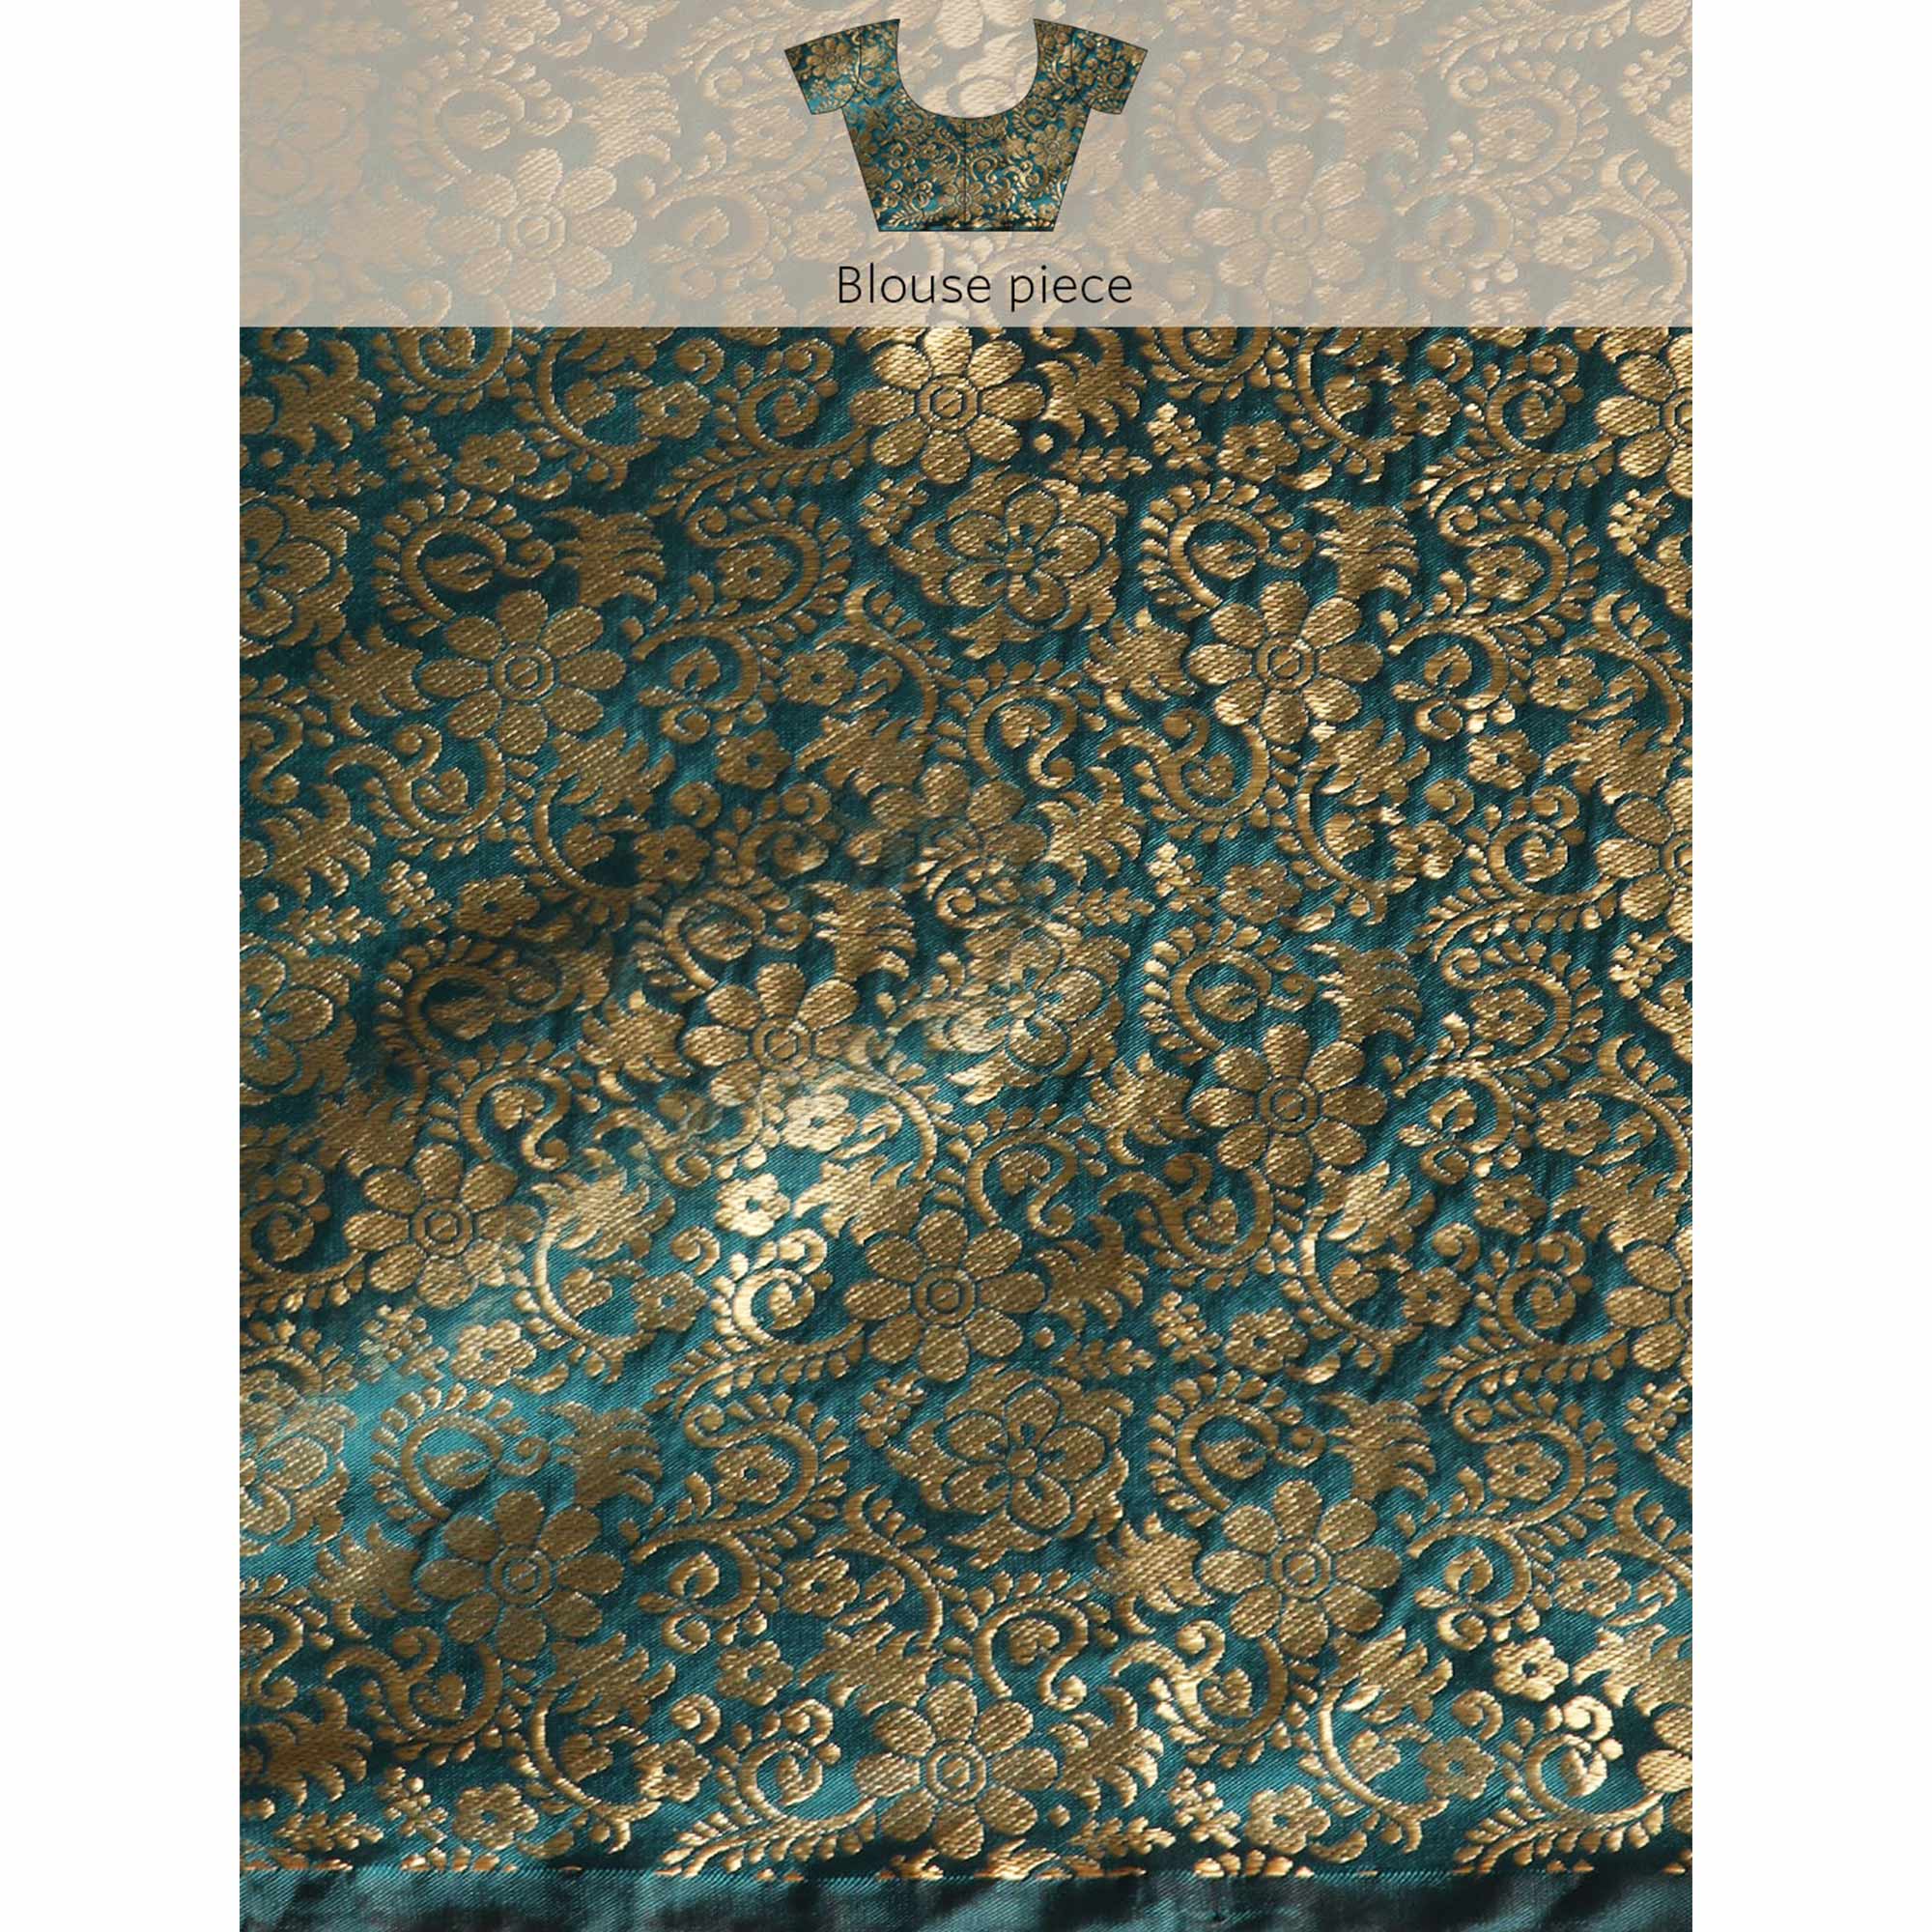 Blue Solid Vichitra Silk Saree With Fancy Border